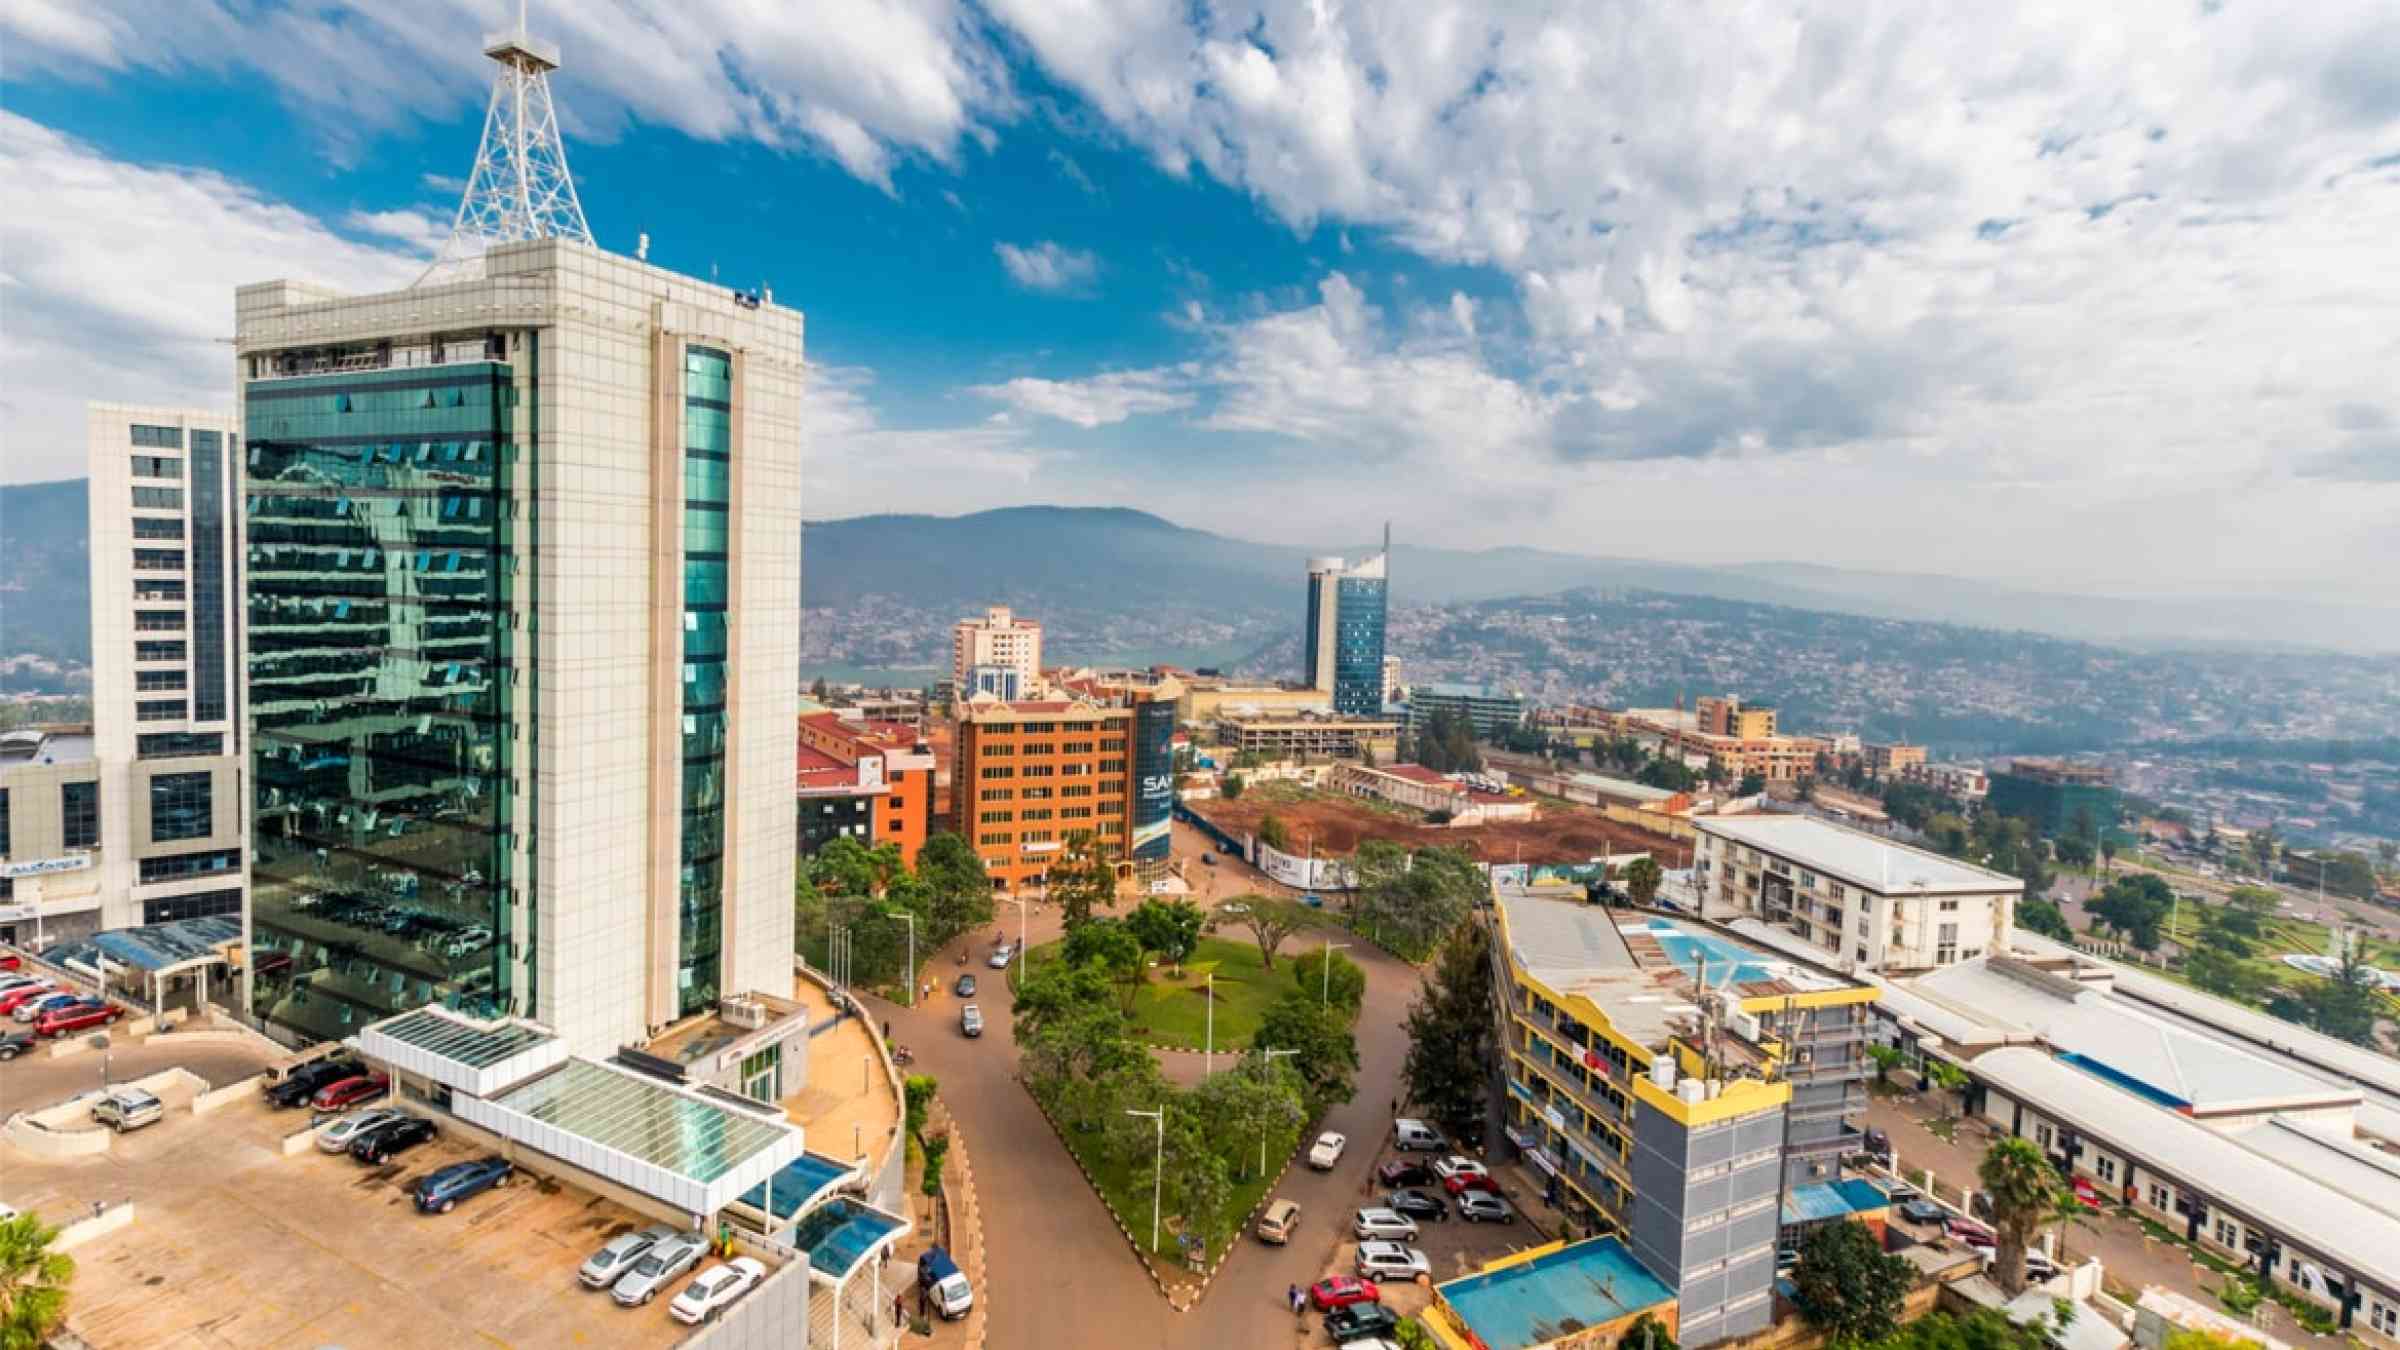 Overview of Kigali, Rwanda